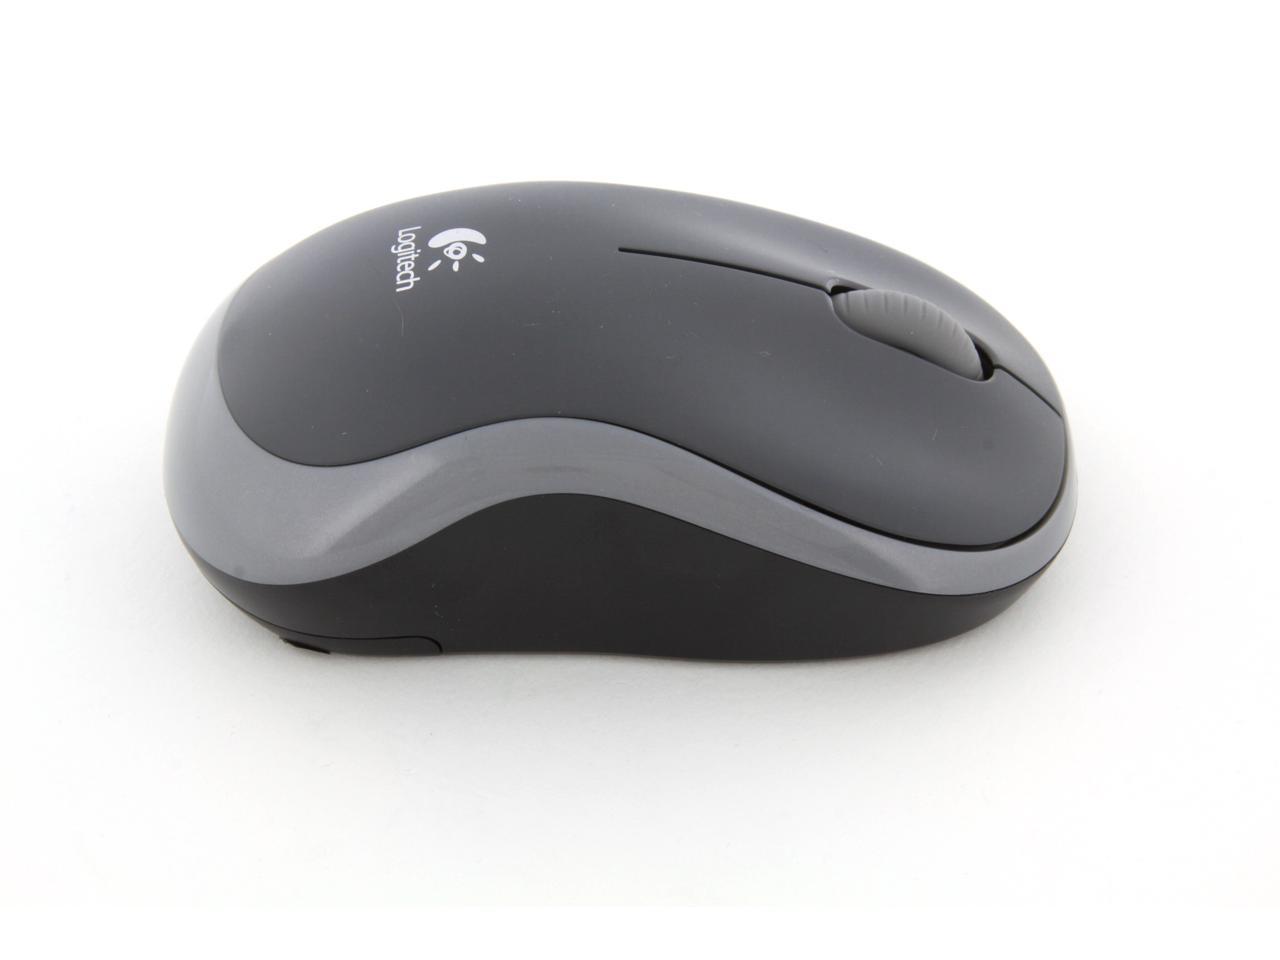 Logitech m205. Logitech m-rcr147r. Logitech m215. Logitech Wireless Mouse m215 Black USB. Windows mouse driver